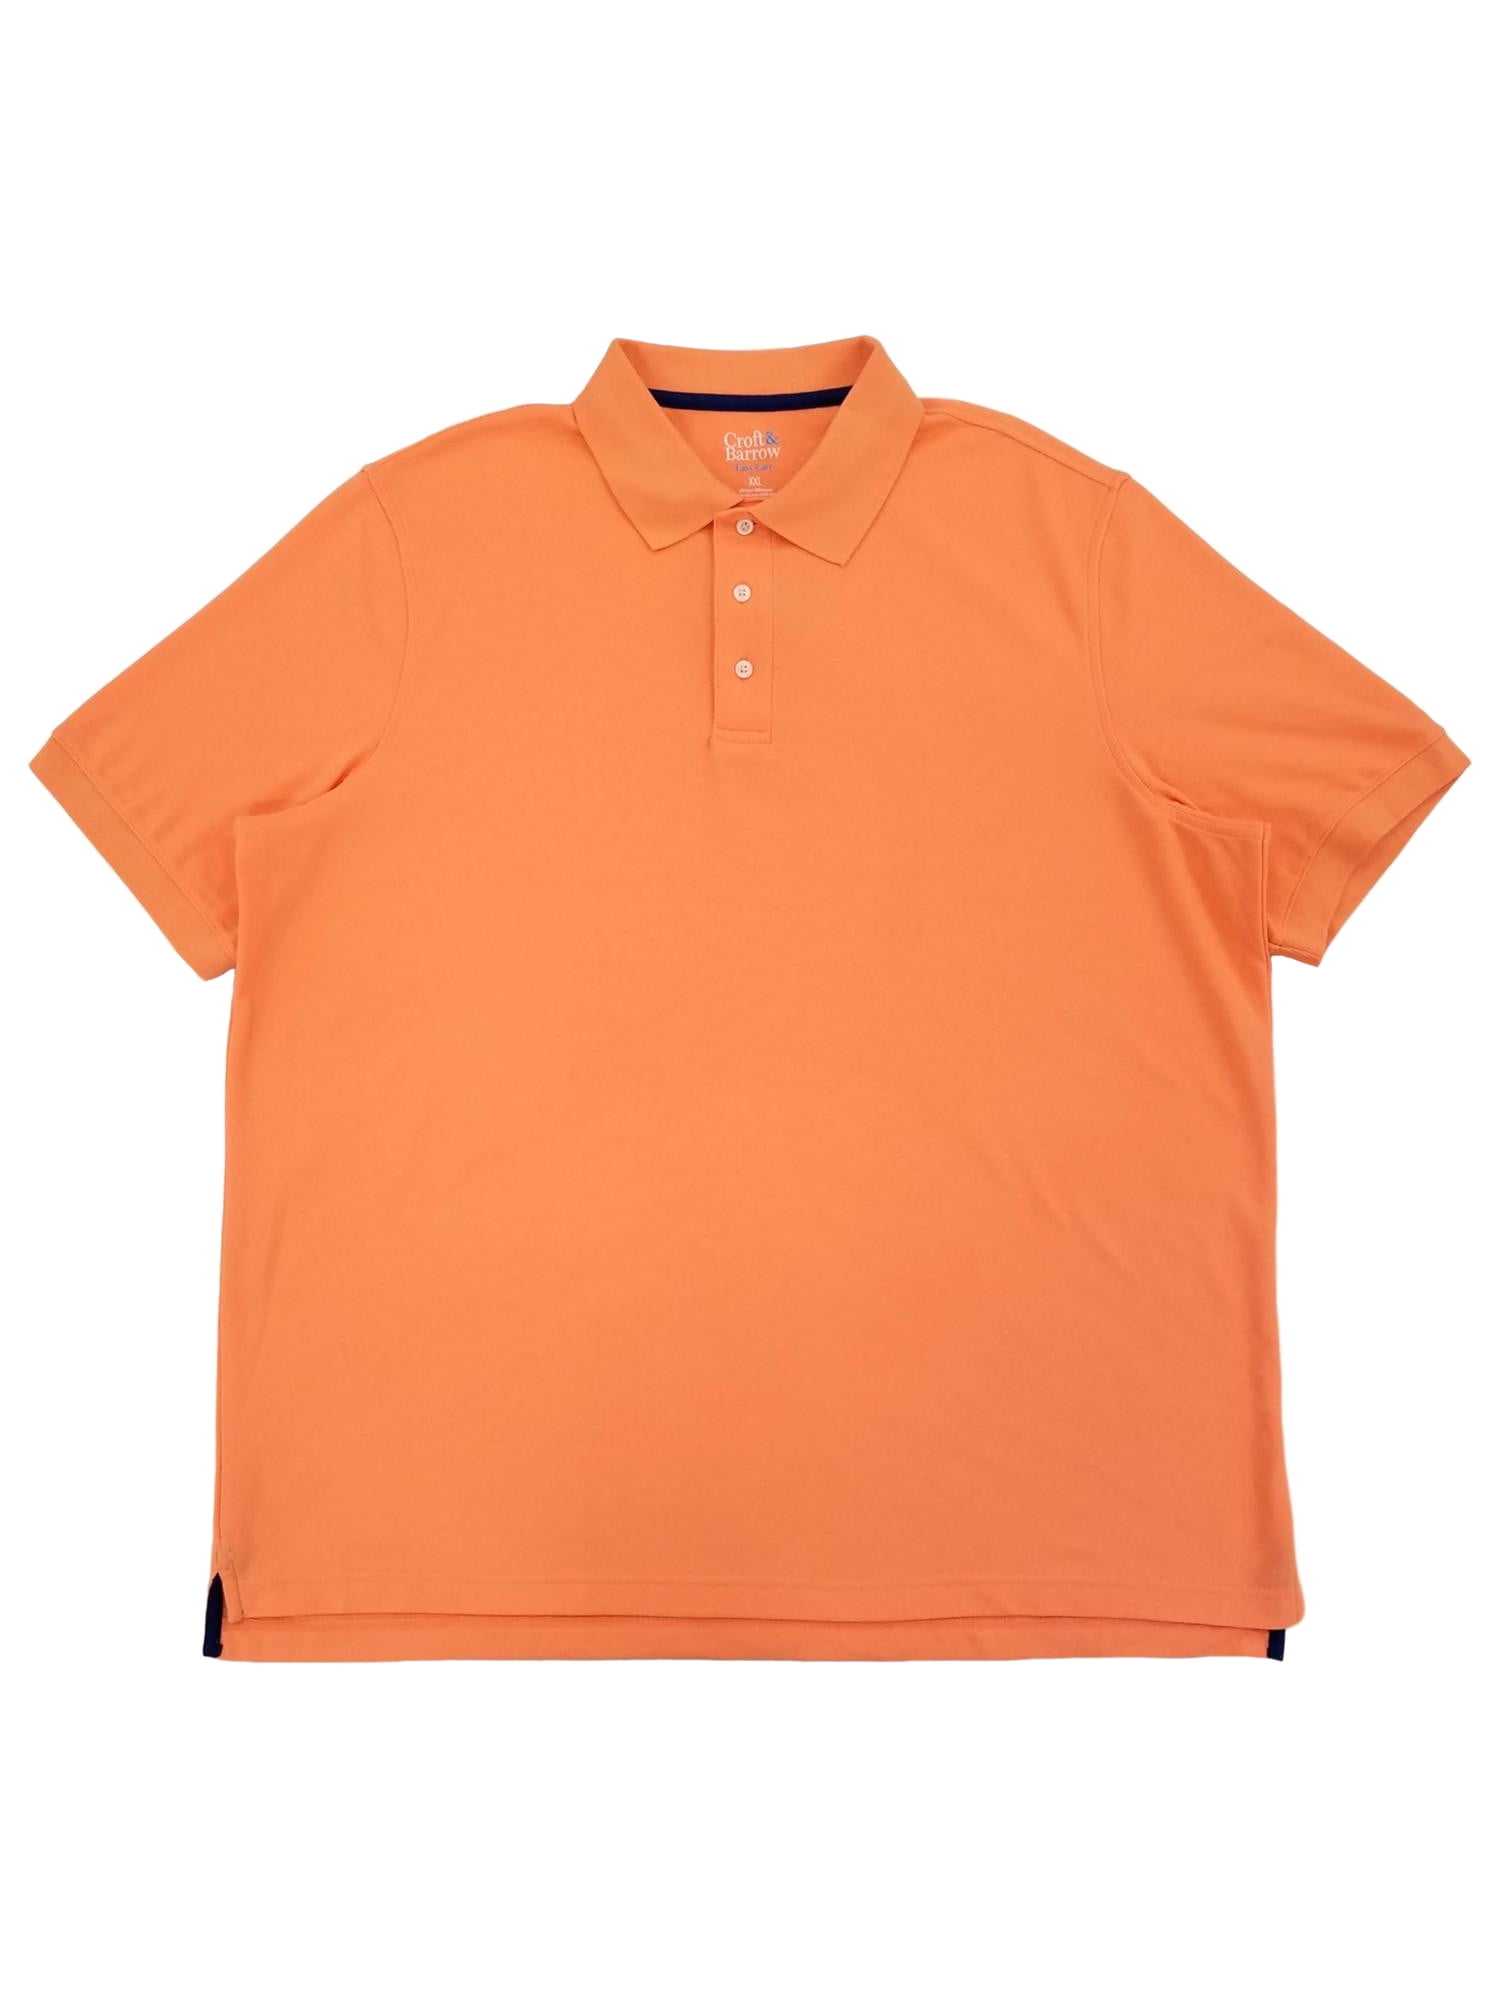 Croft & Barrow Mens Papaya Orange Performance Pique Polo T-Shirt M ...